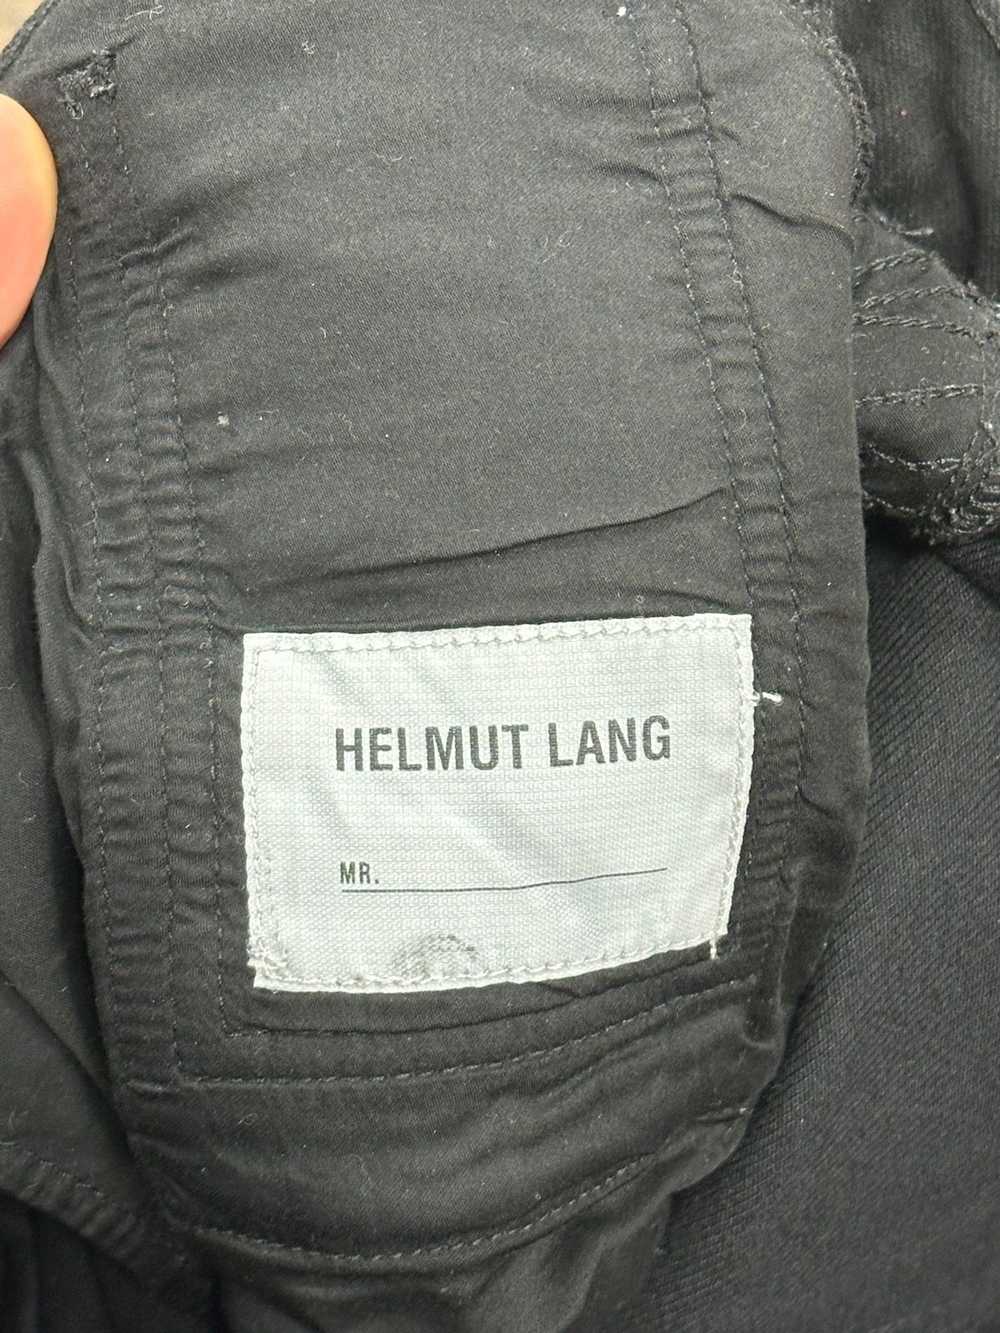 Helmut Lang Helmut Lang Waxed Denim Jeans Size 36… - image 7